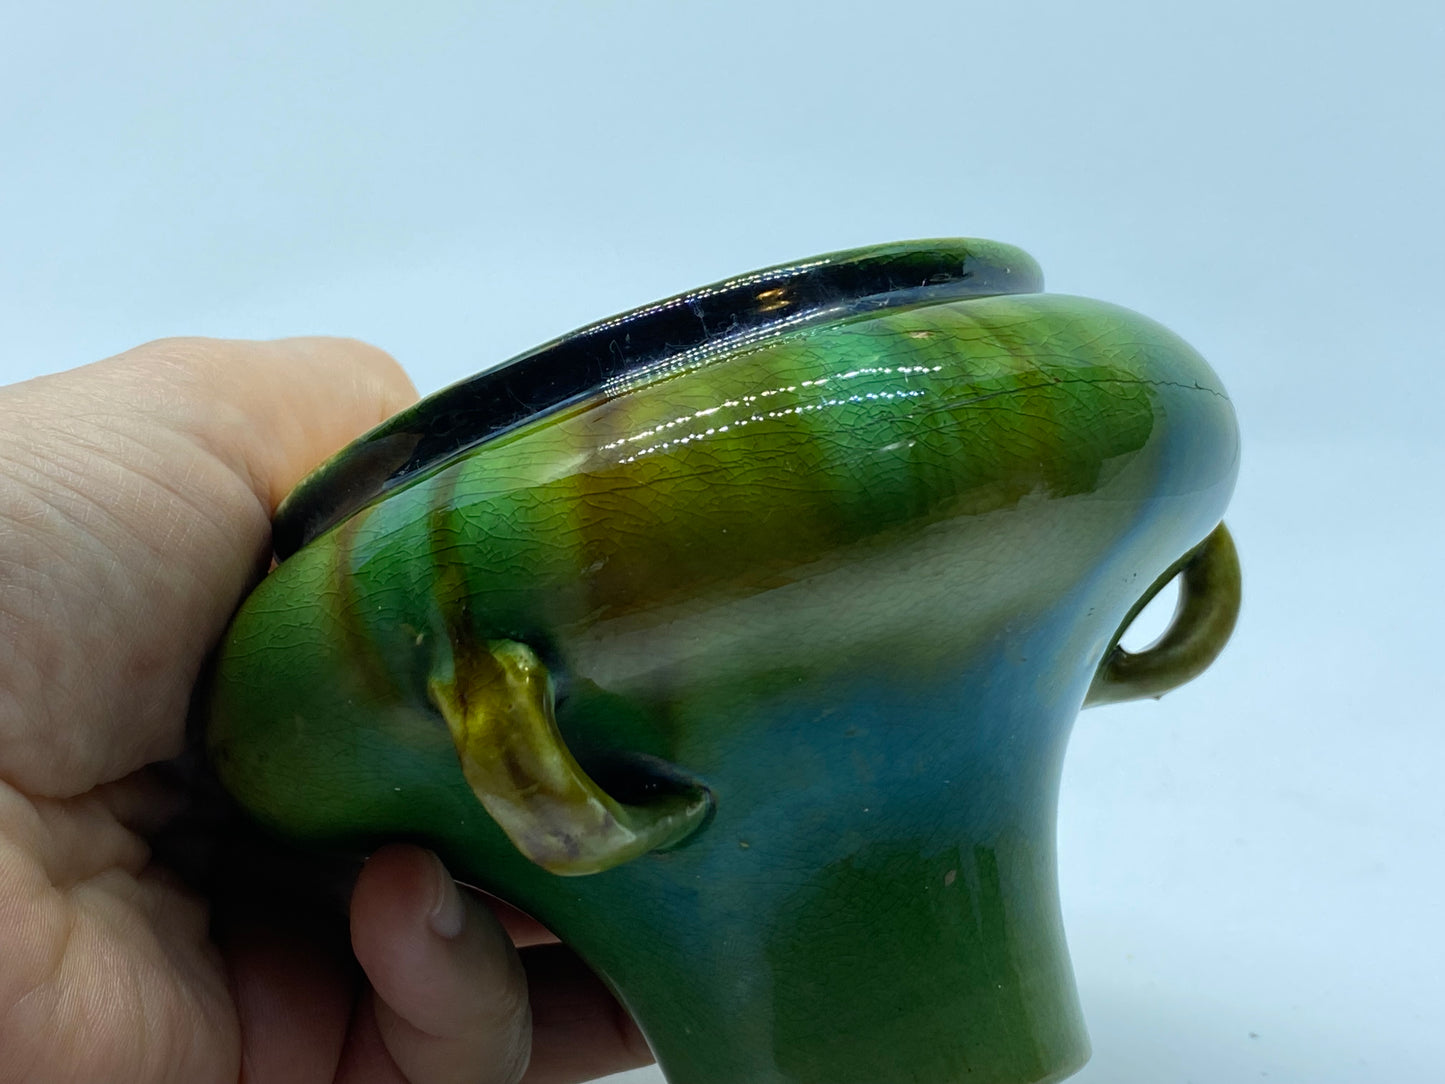 McHugh shape 32 - 1933 tri handle vase - small